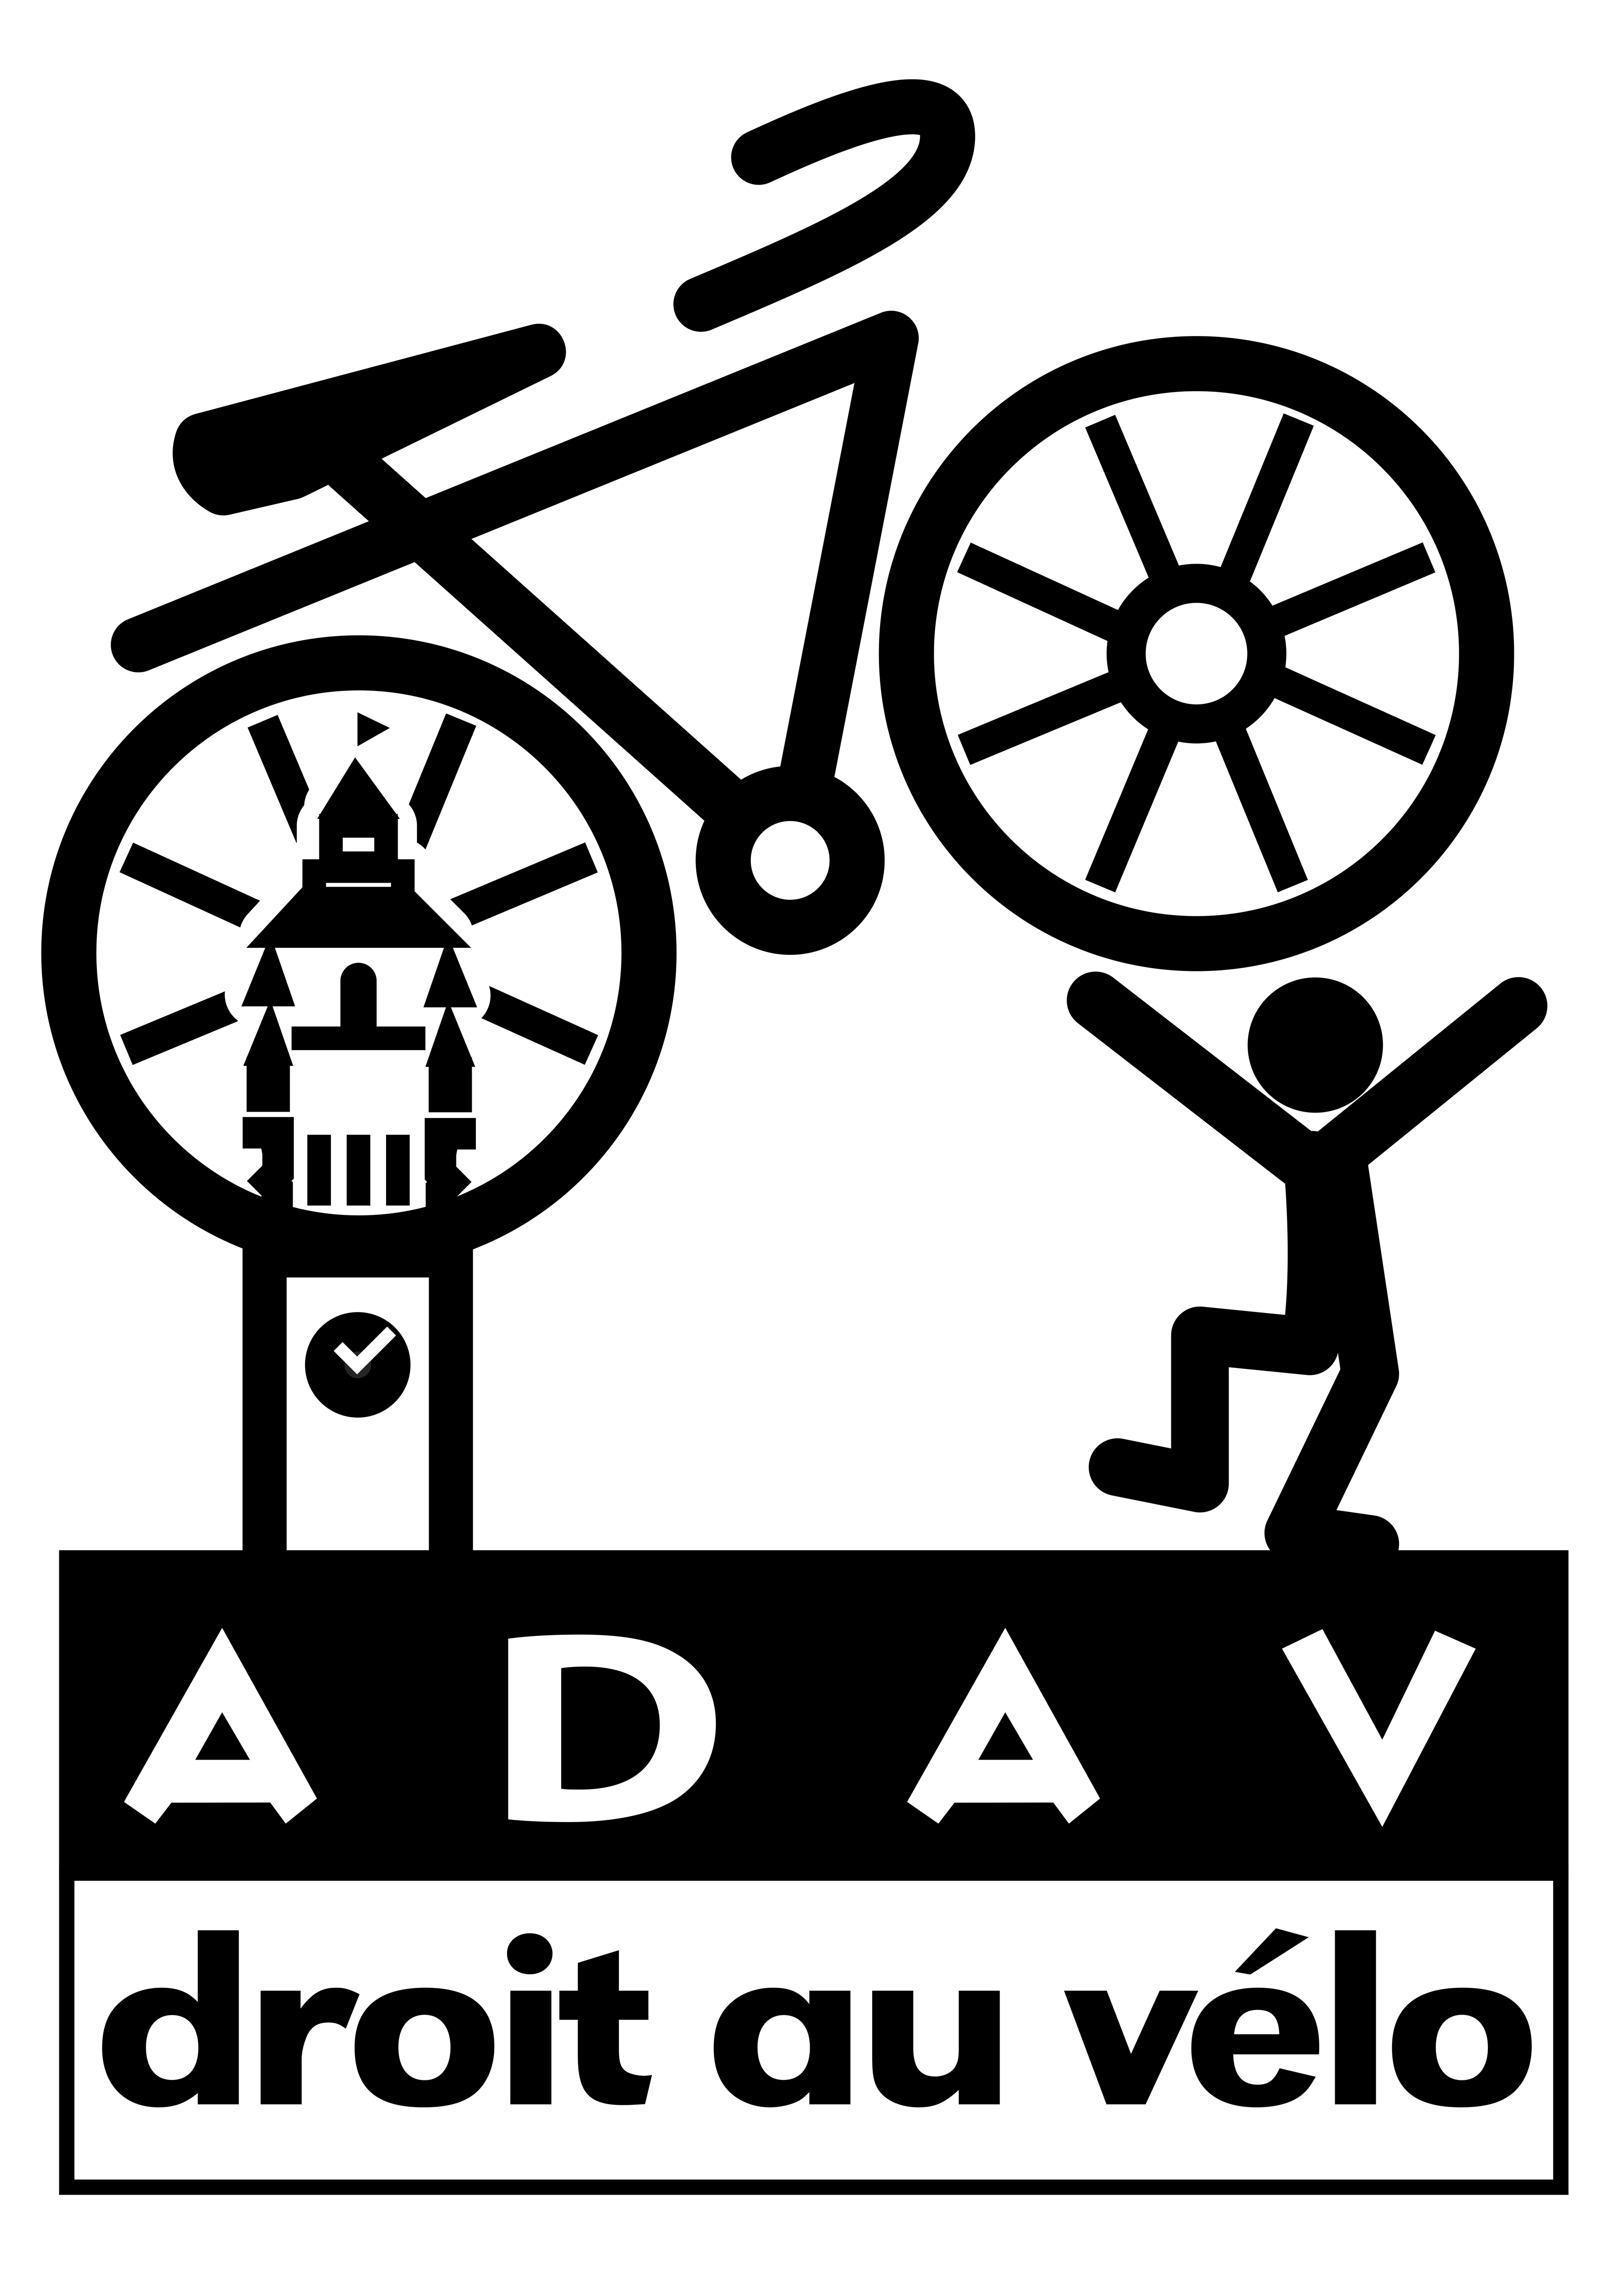 ADAV - Droit au vélo